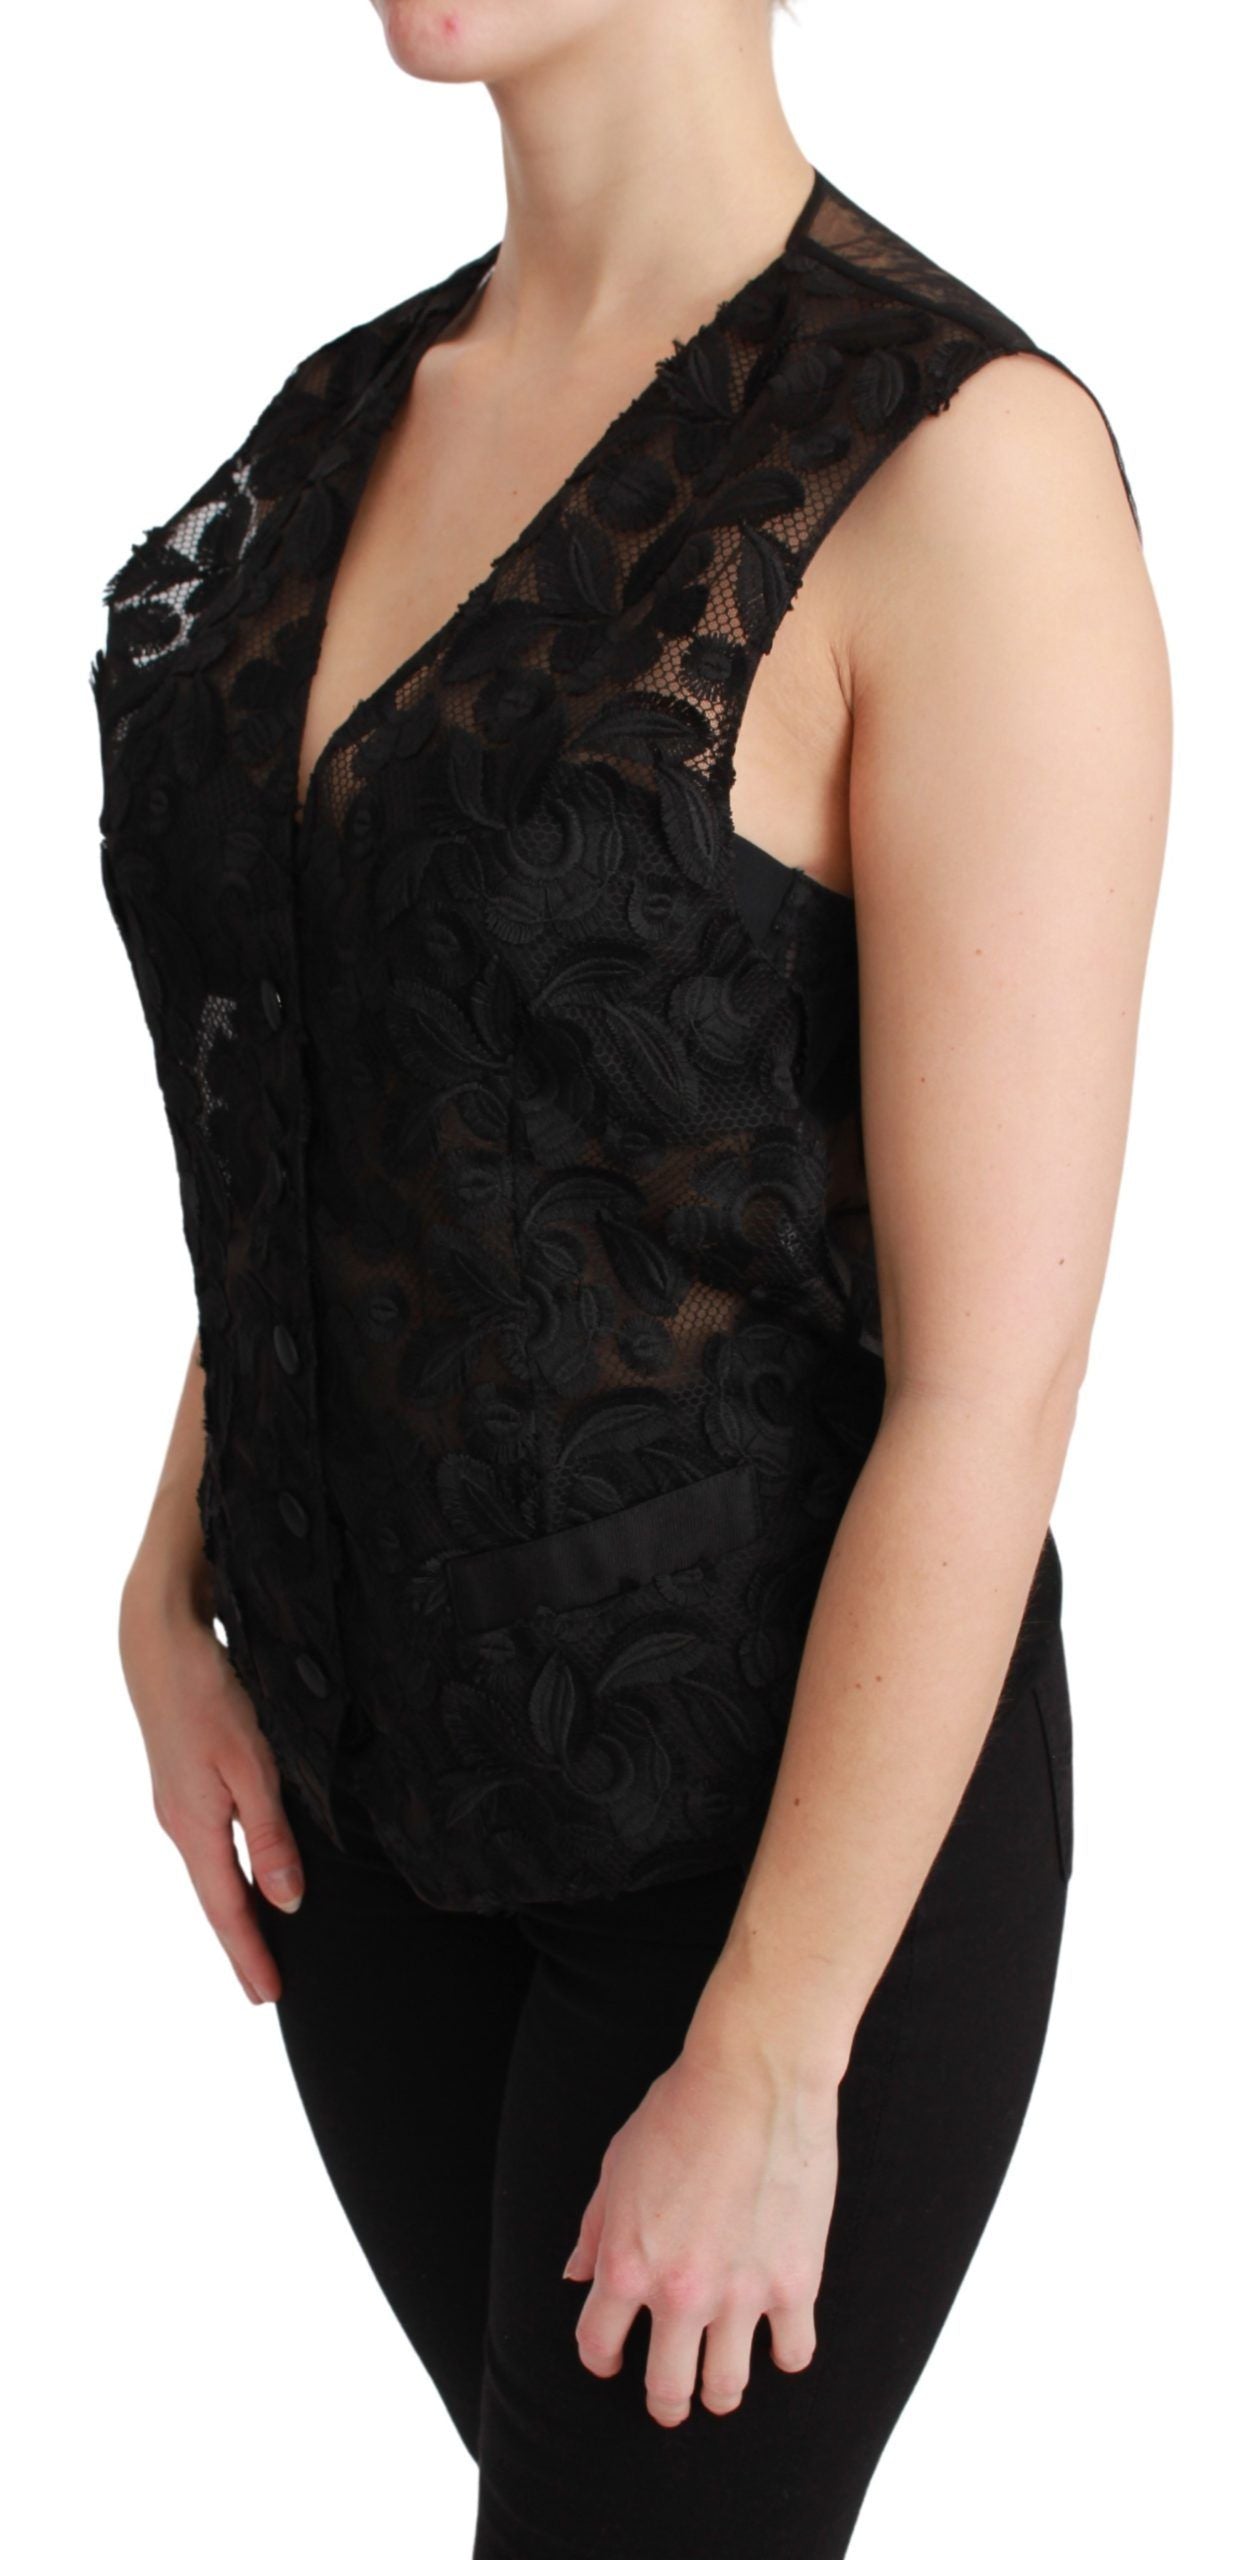 Dolce & Gabbana Black Floral Brocade Top gilet wwistcoat